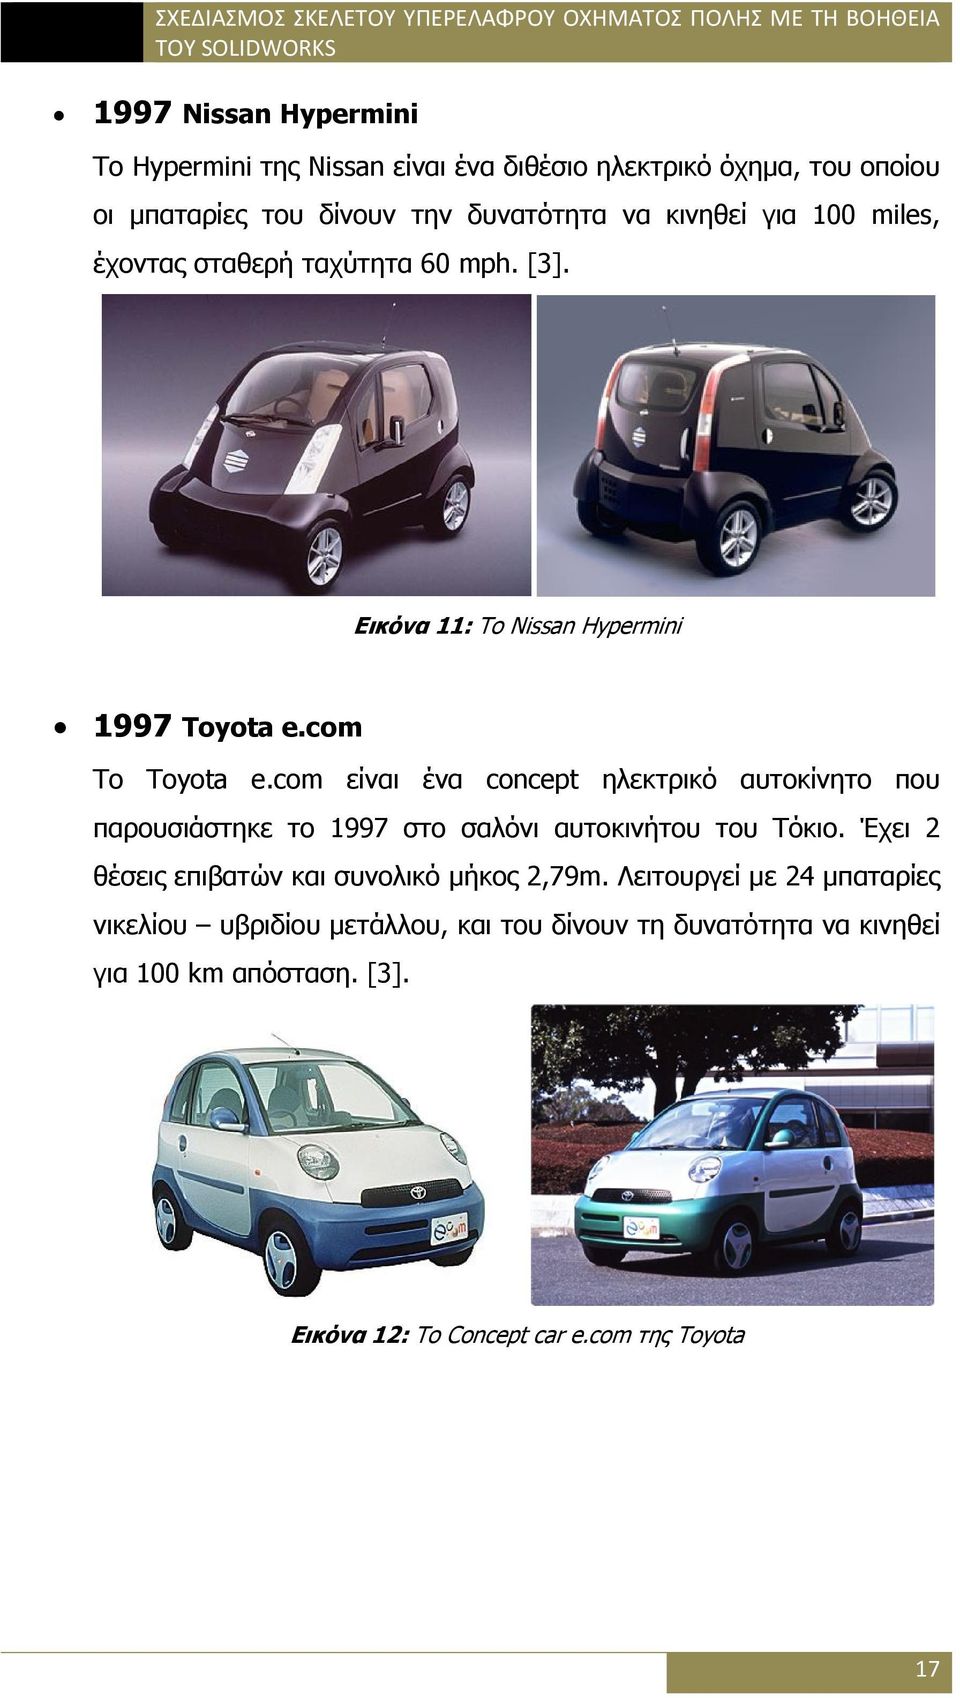 com είναι ένα concept ηλεκτρικό αυτοκίνητο που παρουσιάστηκε το 1997 στο σαλόνι αυτοκινήτου του Τόκιο.